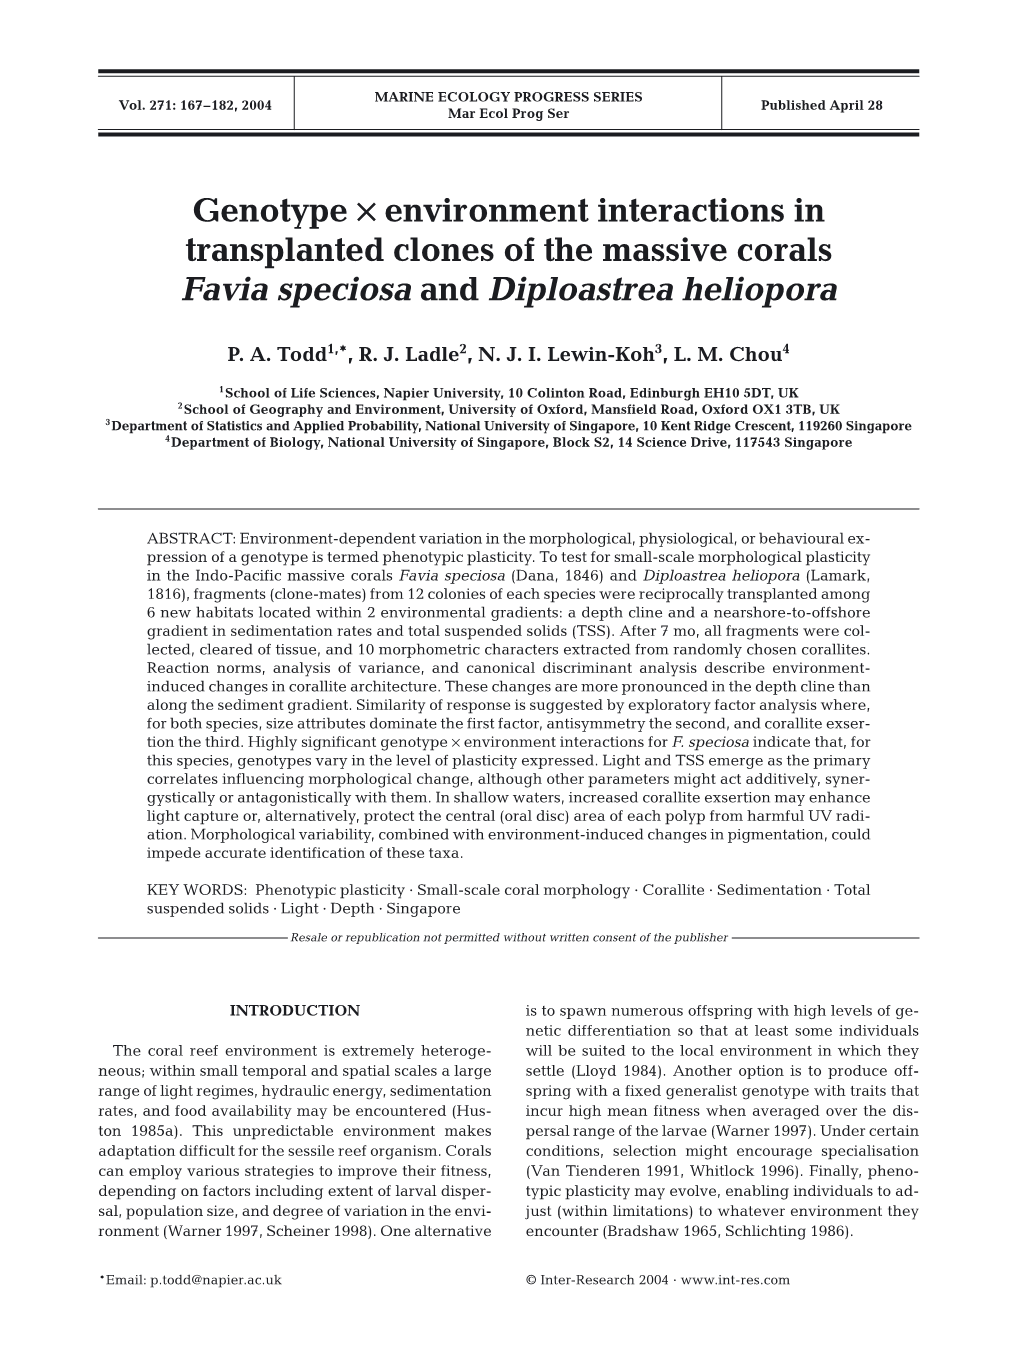 Genotype× Environment Interactions in Transplanted Clones of the Massive Corals Favia Speciosa and Diploastrea Heliopora